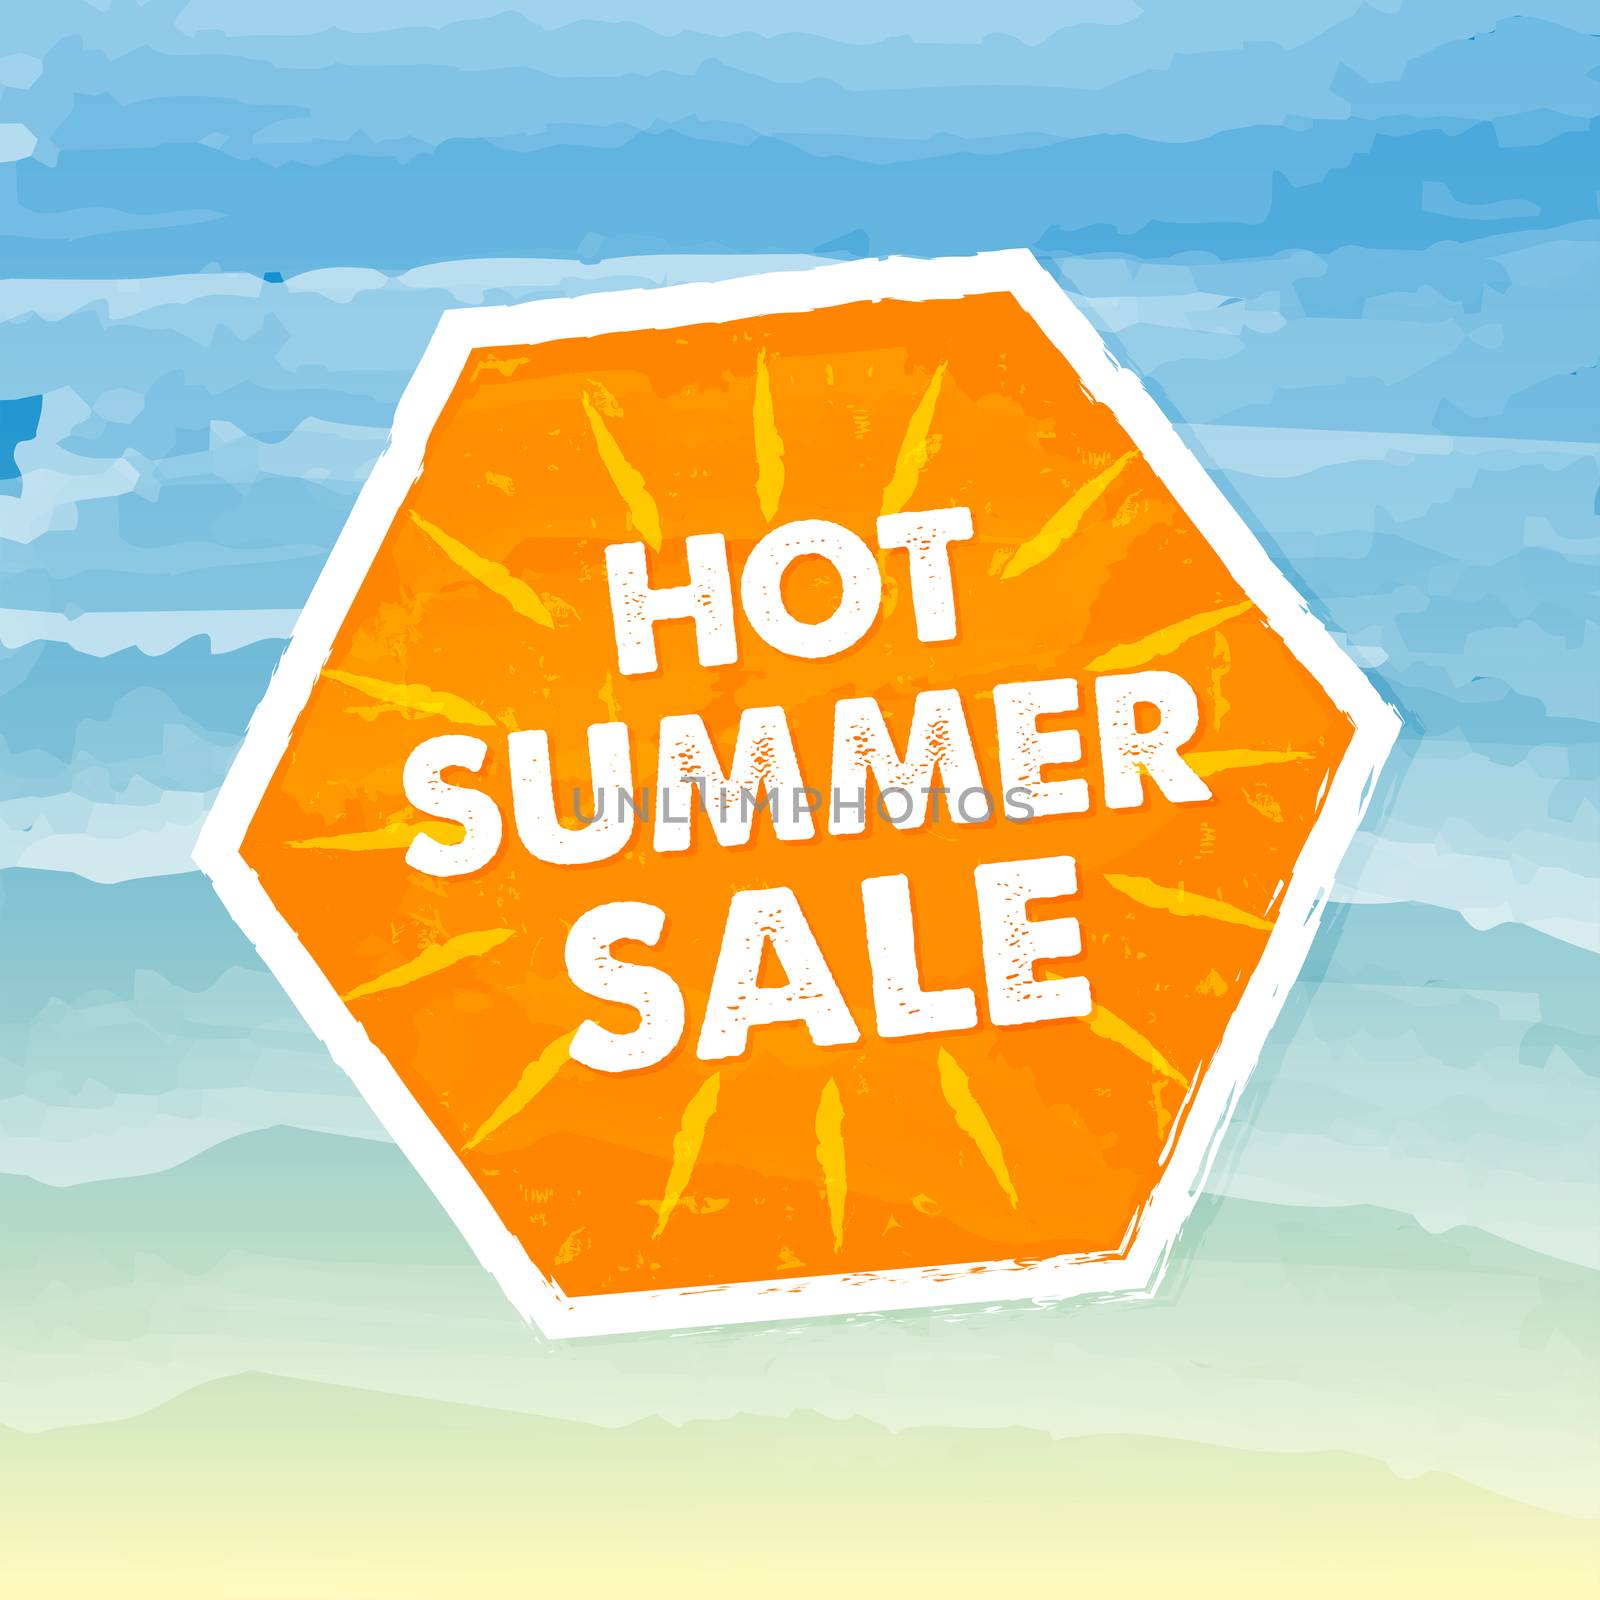 hot summer sale in orange label over sea background by marinini